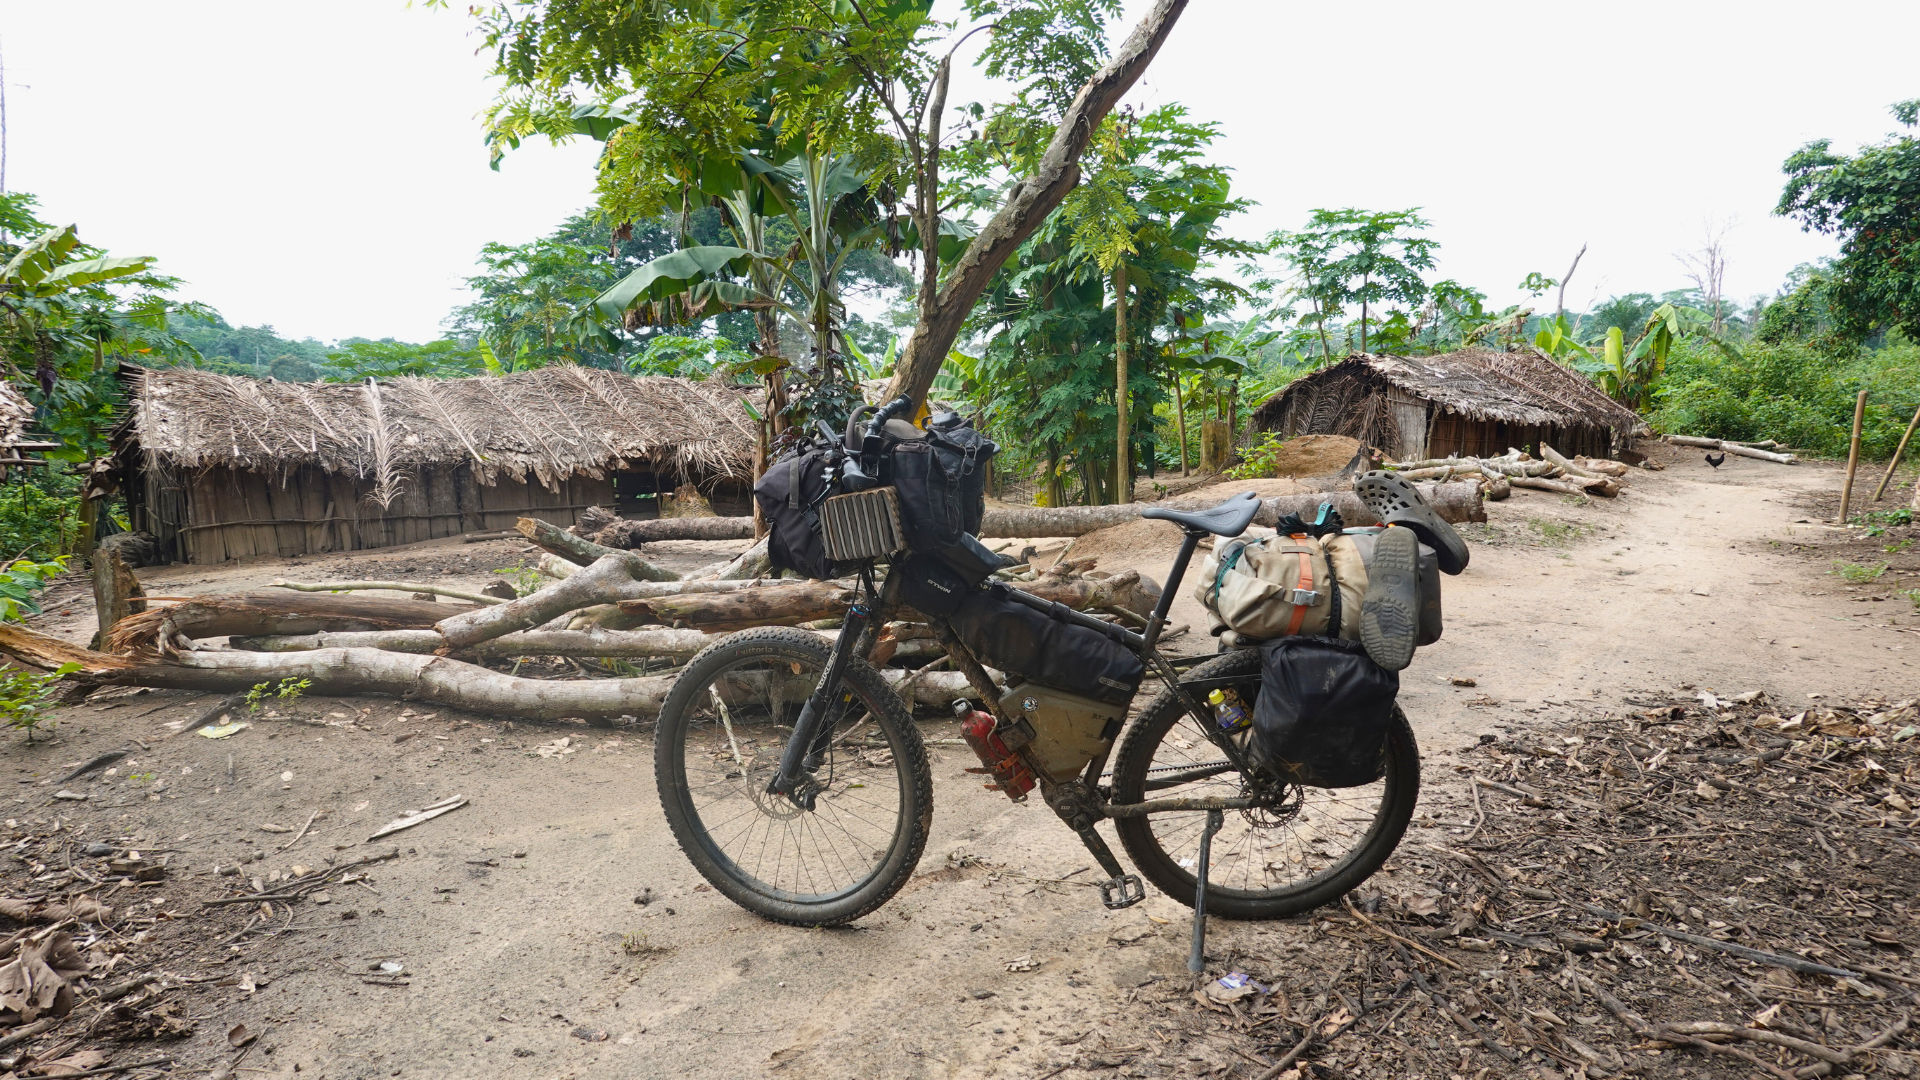 bikepacking the congo jungle (DRC)